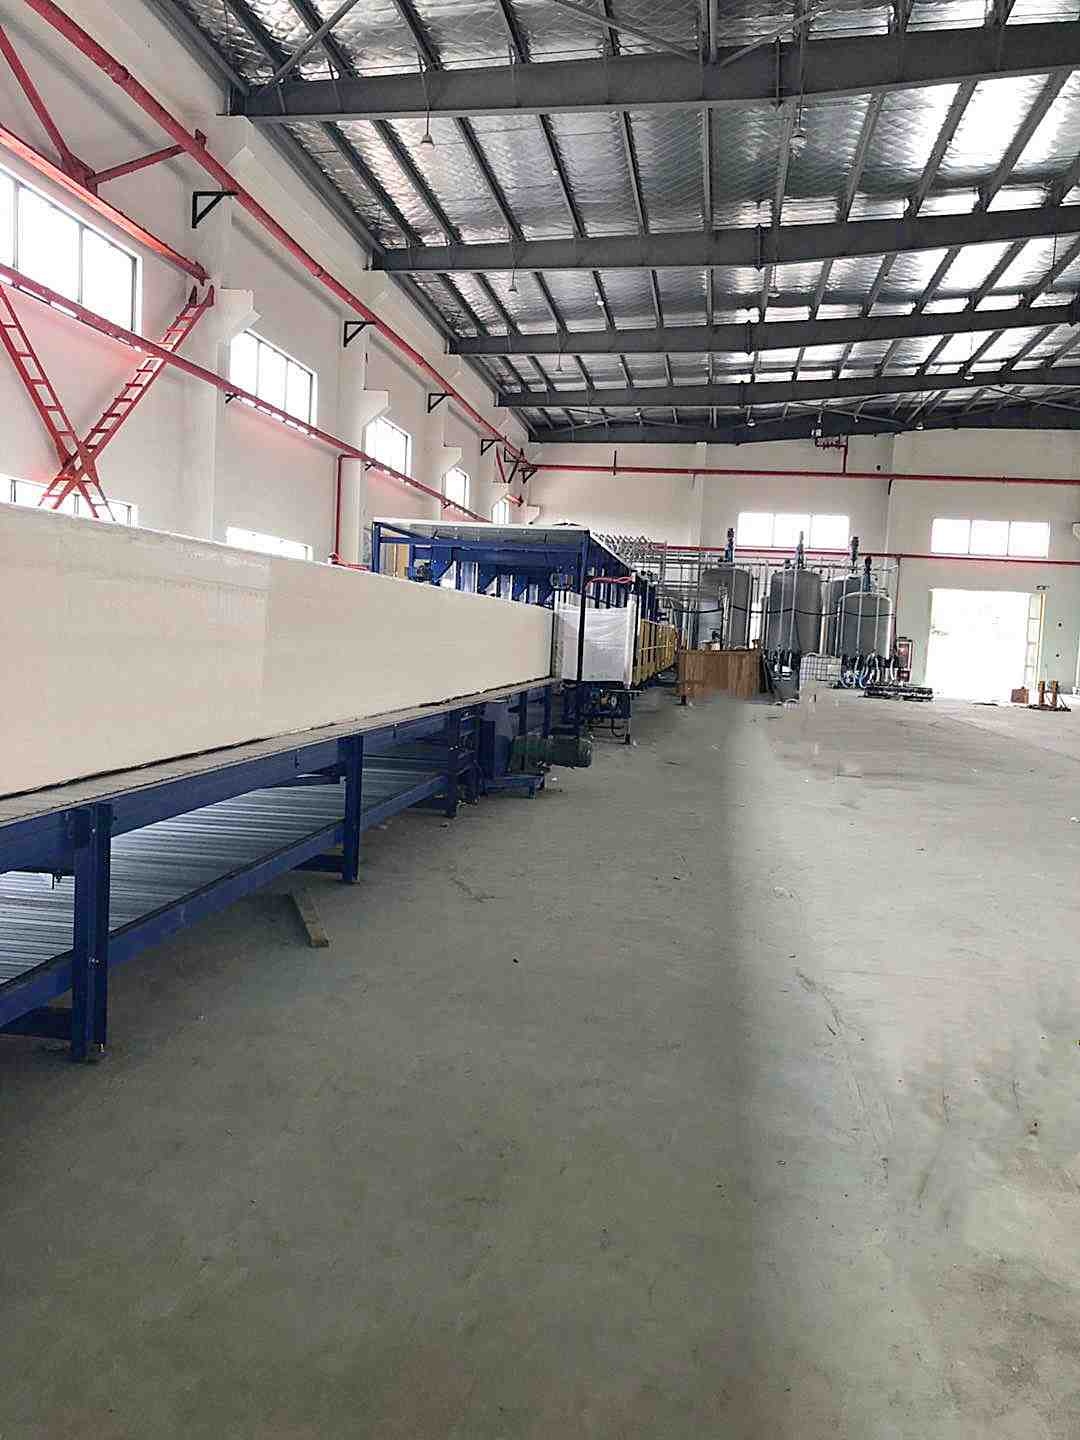 Automatic Continuous Polyurethane Foam Production Machine - China